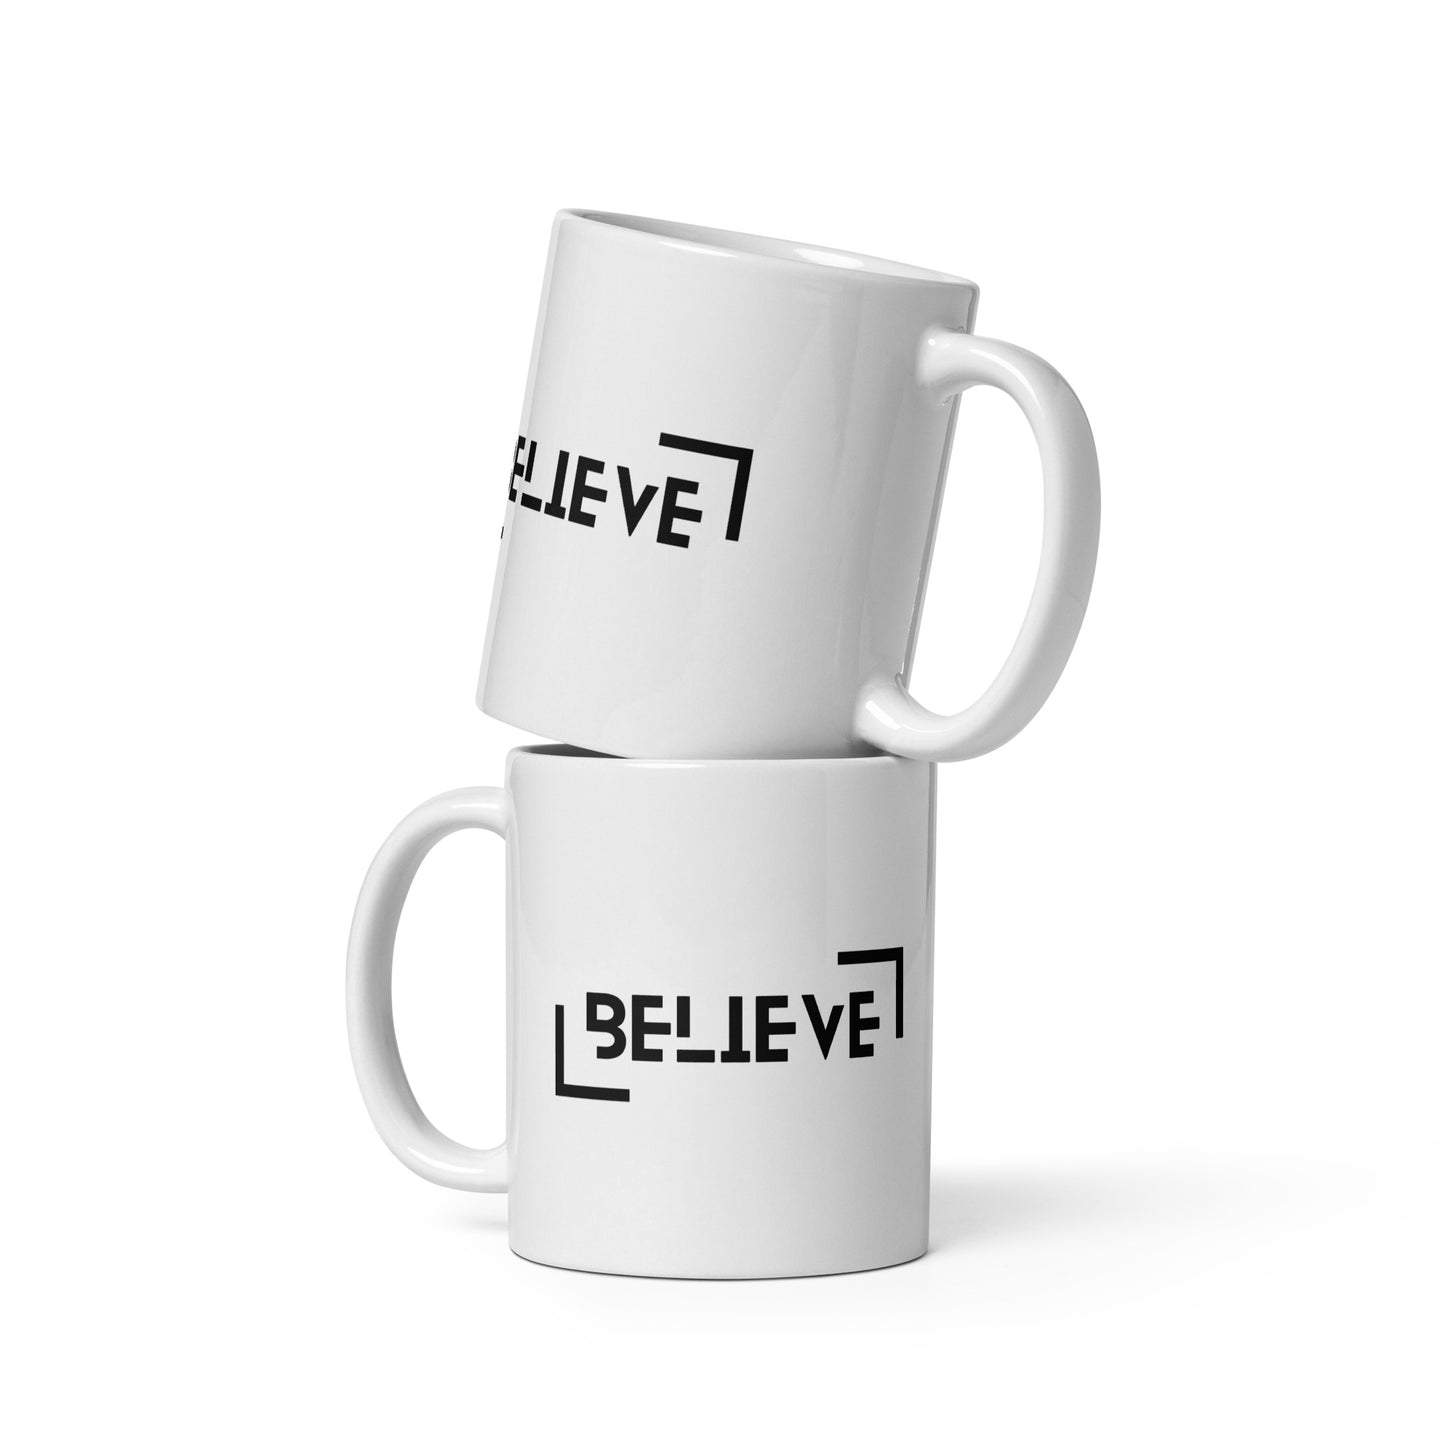 BELIEVE White Mug